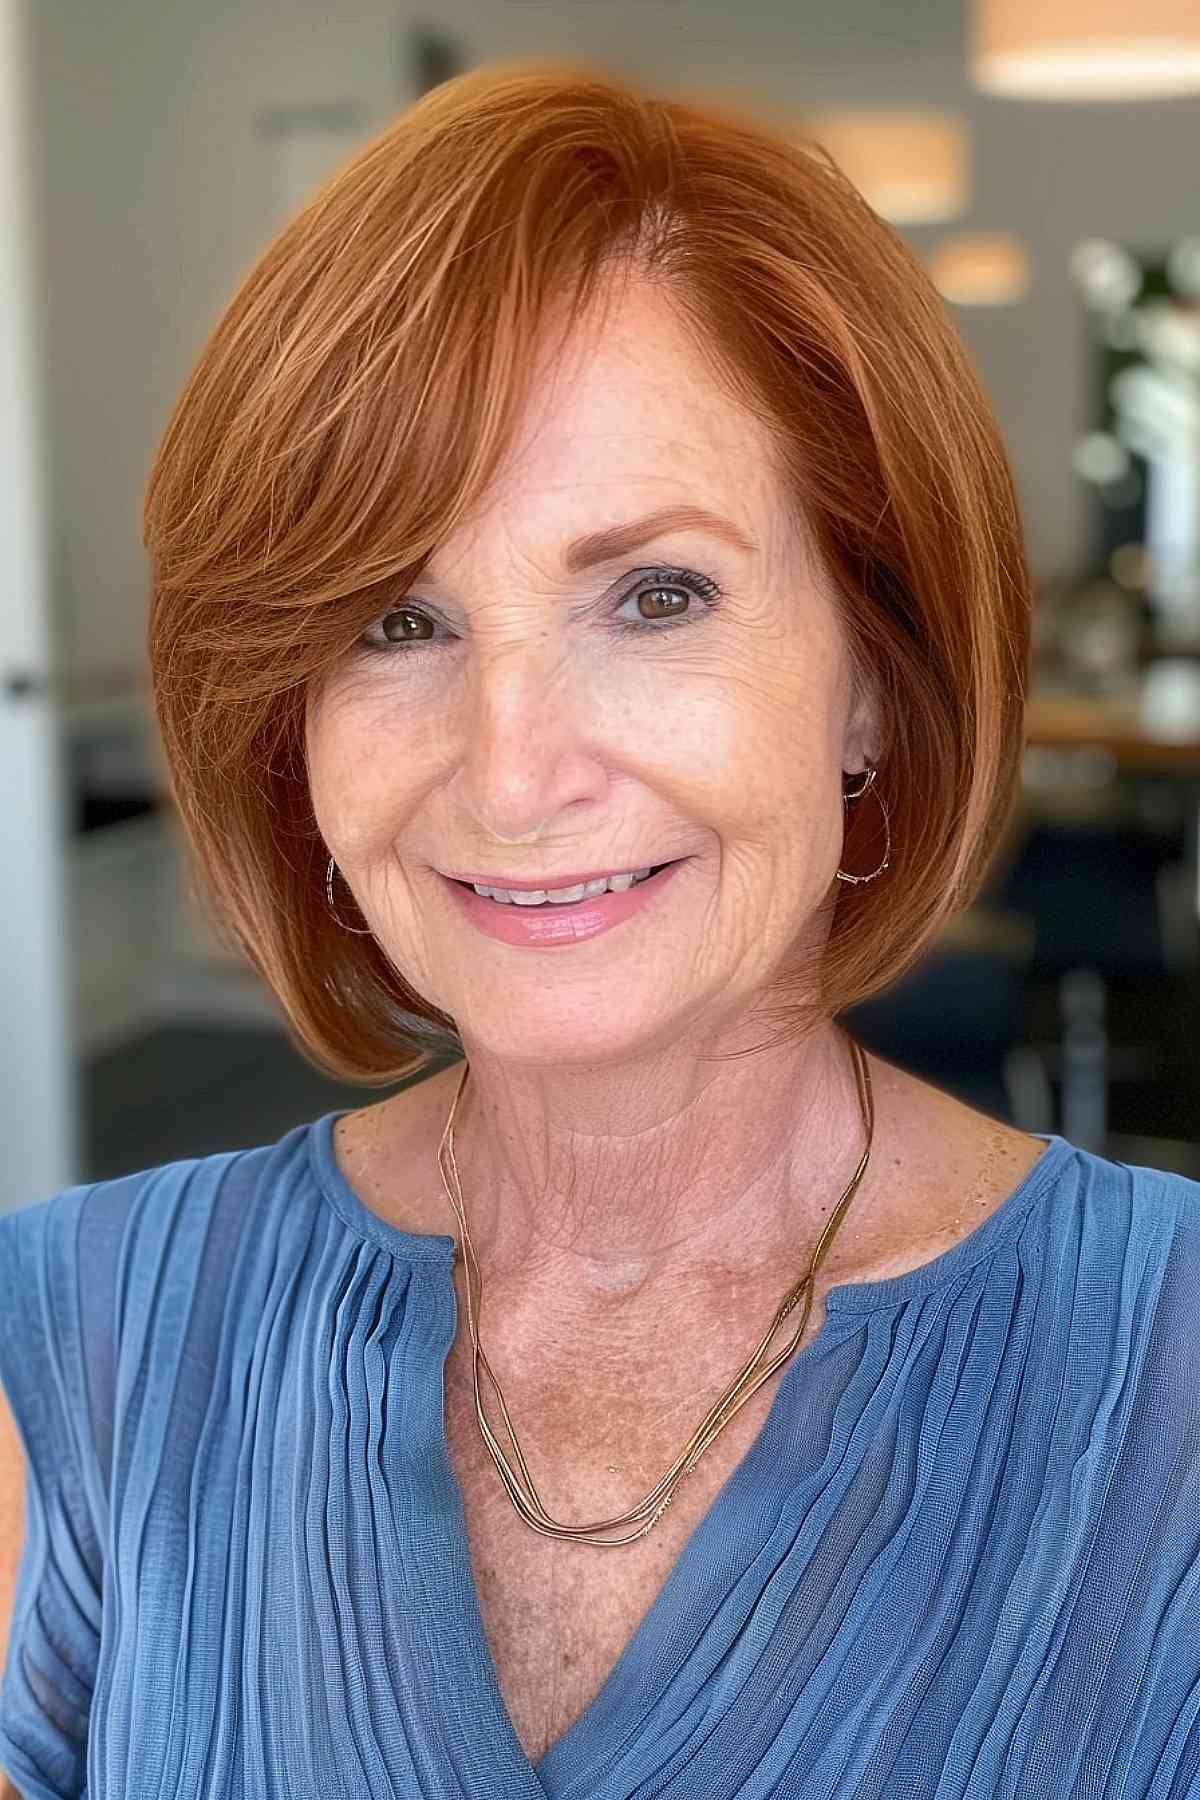 Sophisticated ginger copper bob for women over 60